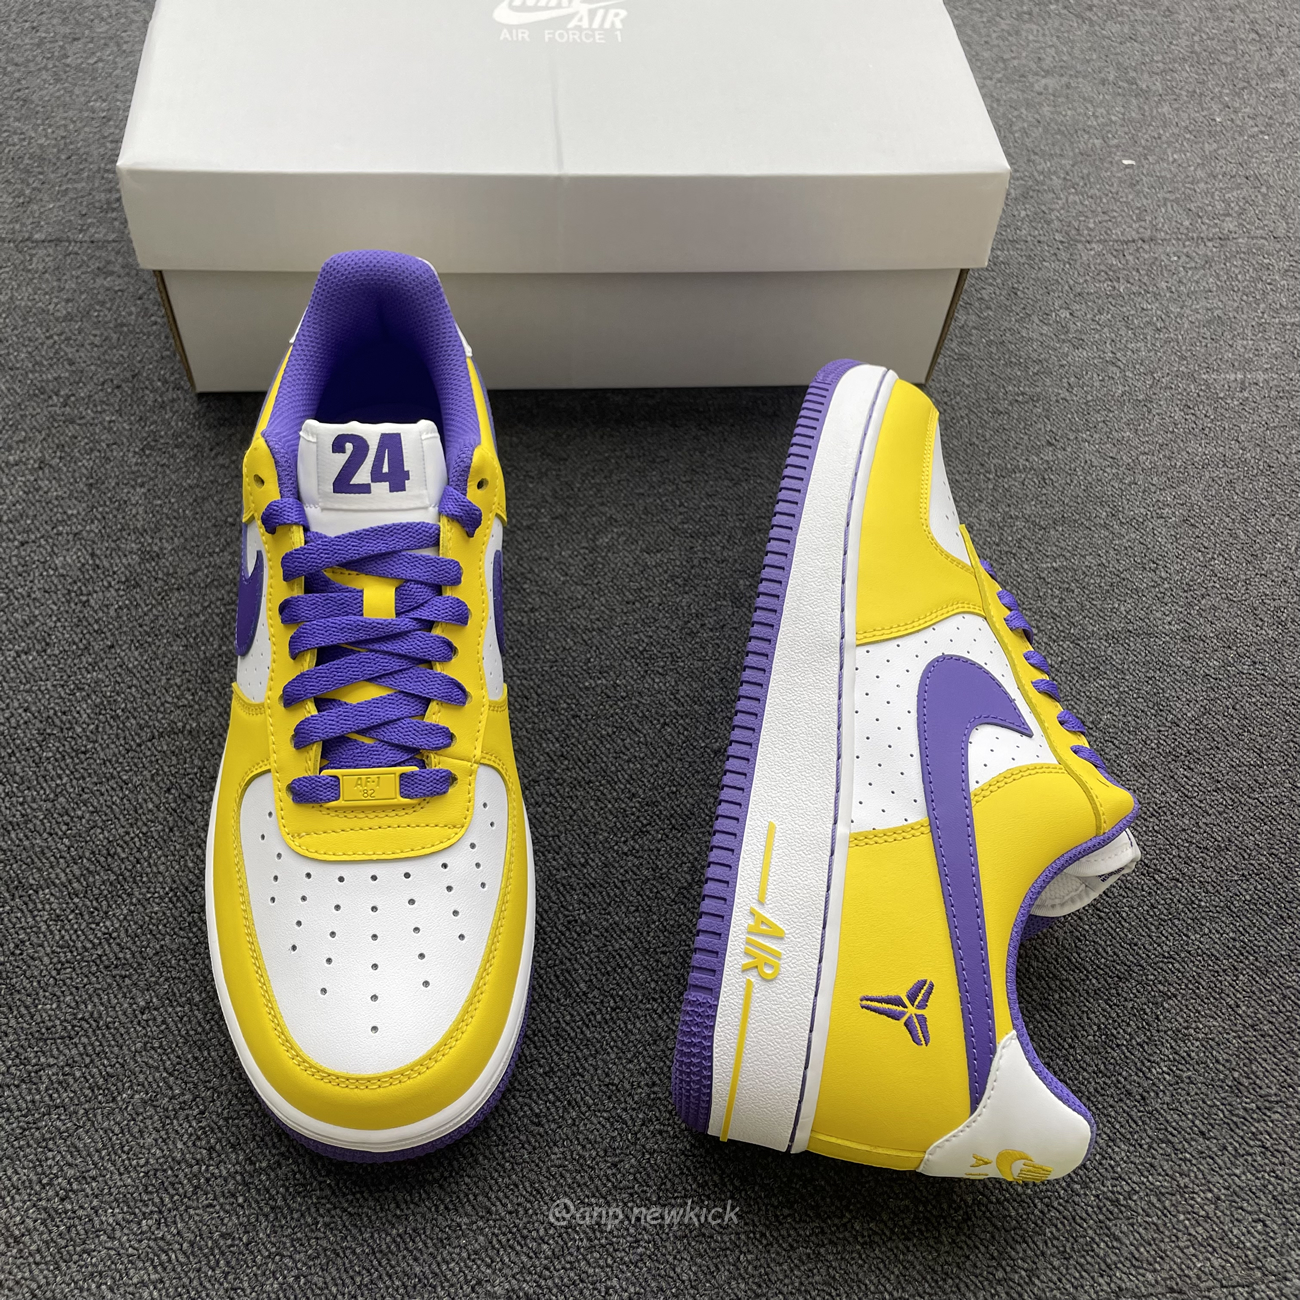 Kobe Bryant X Nike Air Force 1 Low Purple Gold Color (3) - newkick.org